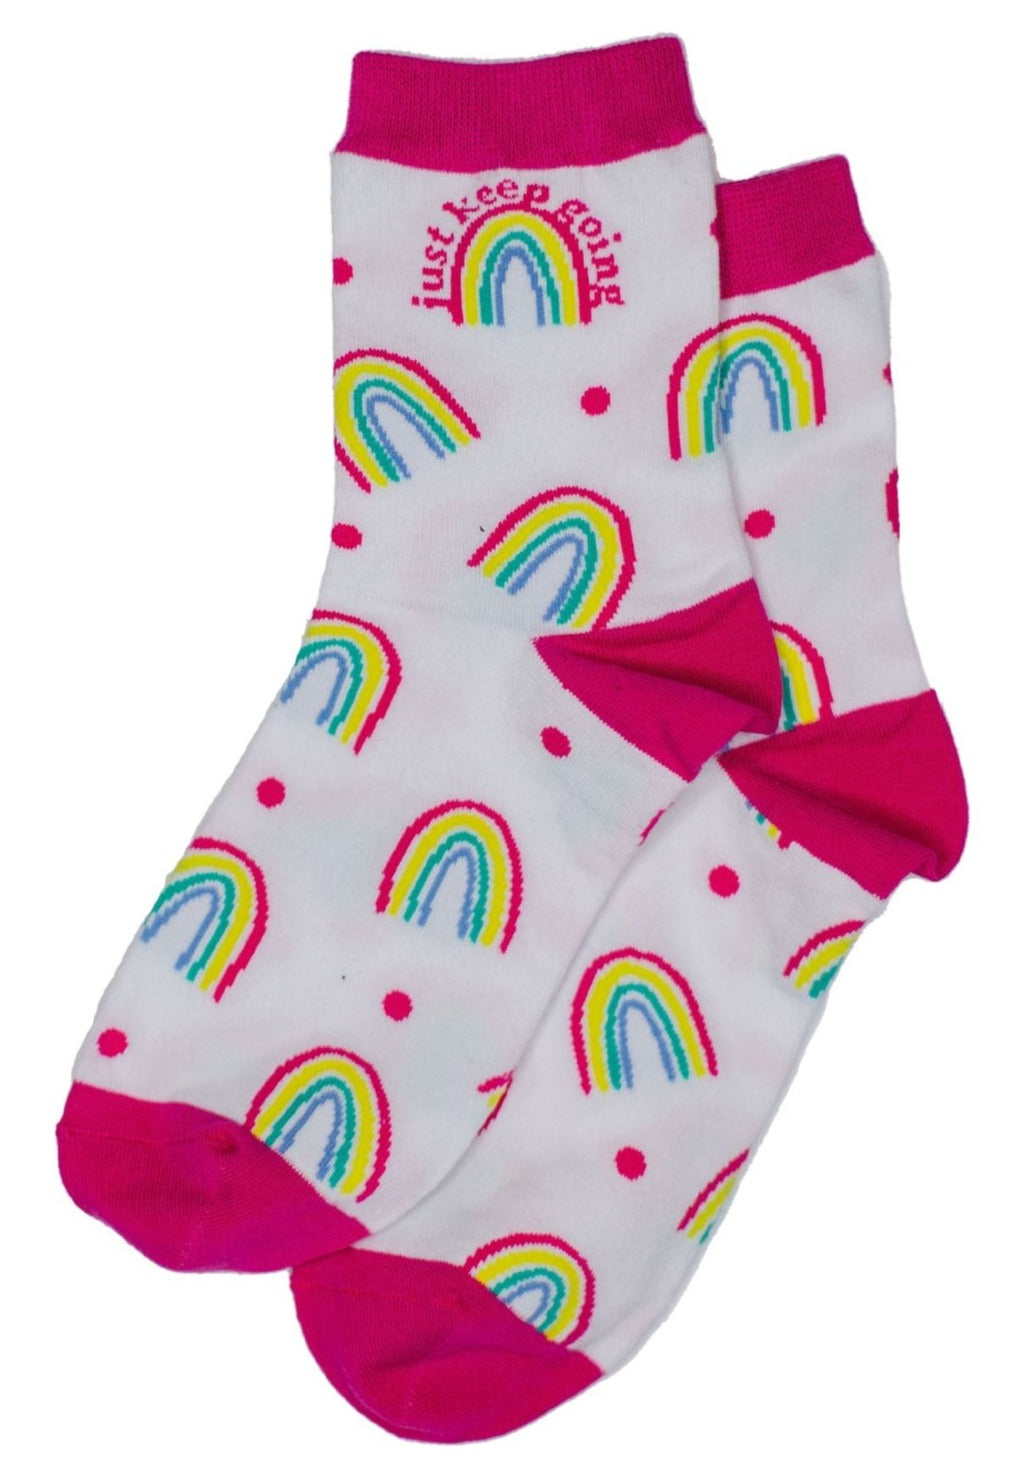 Inspirational Crew Socks Accessories Mary Square Rainbow